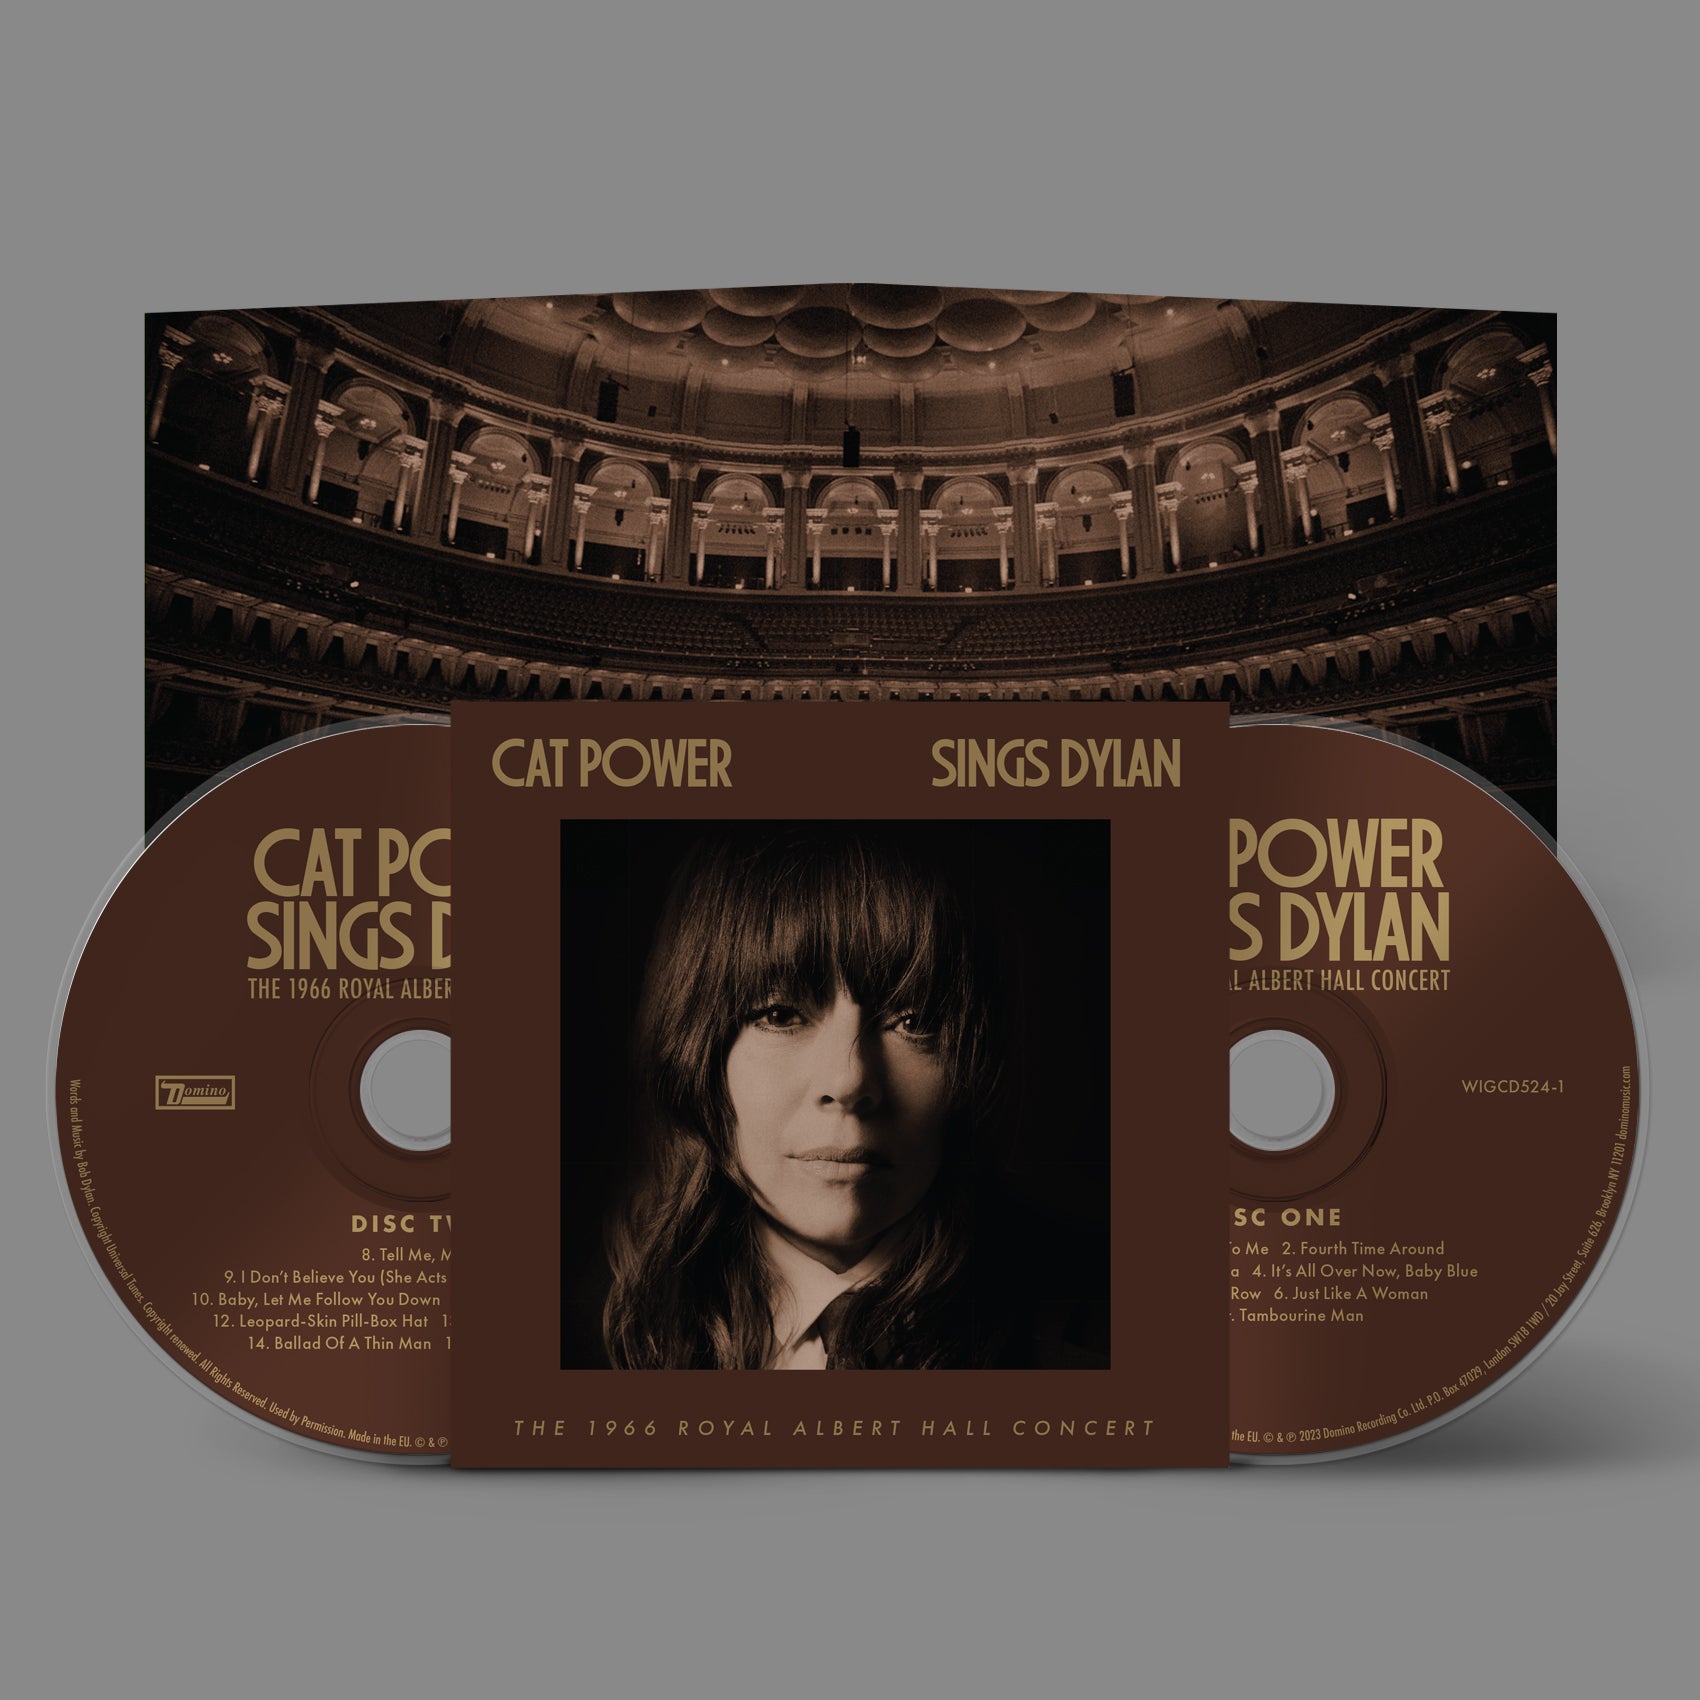 Cat Power - Cat Power Sings Dylan - The 1966 Royal Albert Hall Concert: 2CD